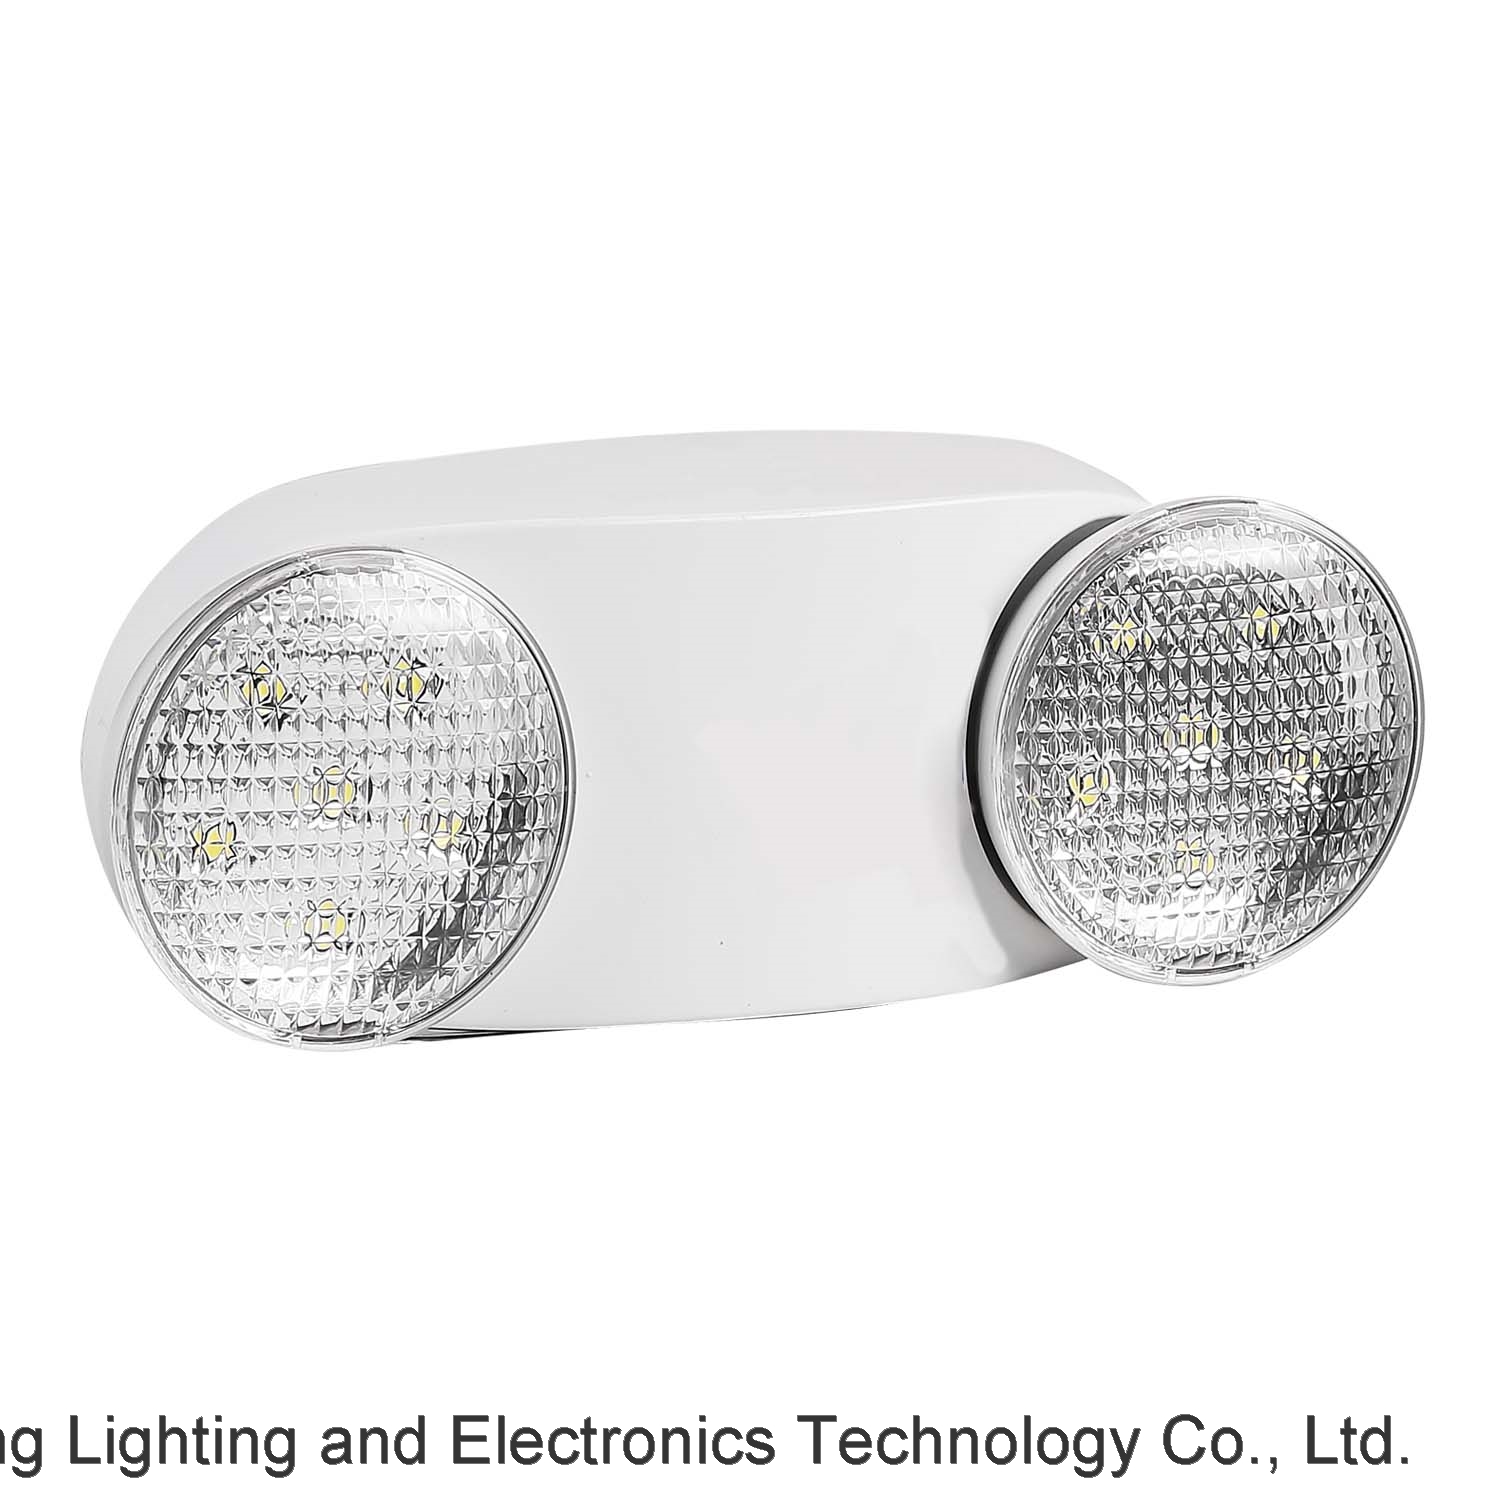 UL Listed LED Emergency Light CR-7012